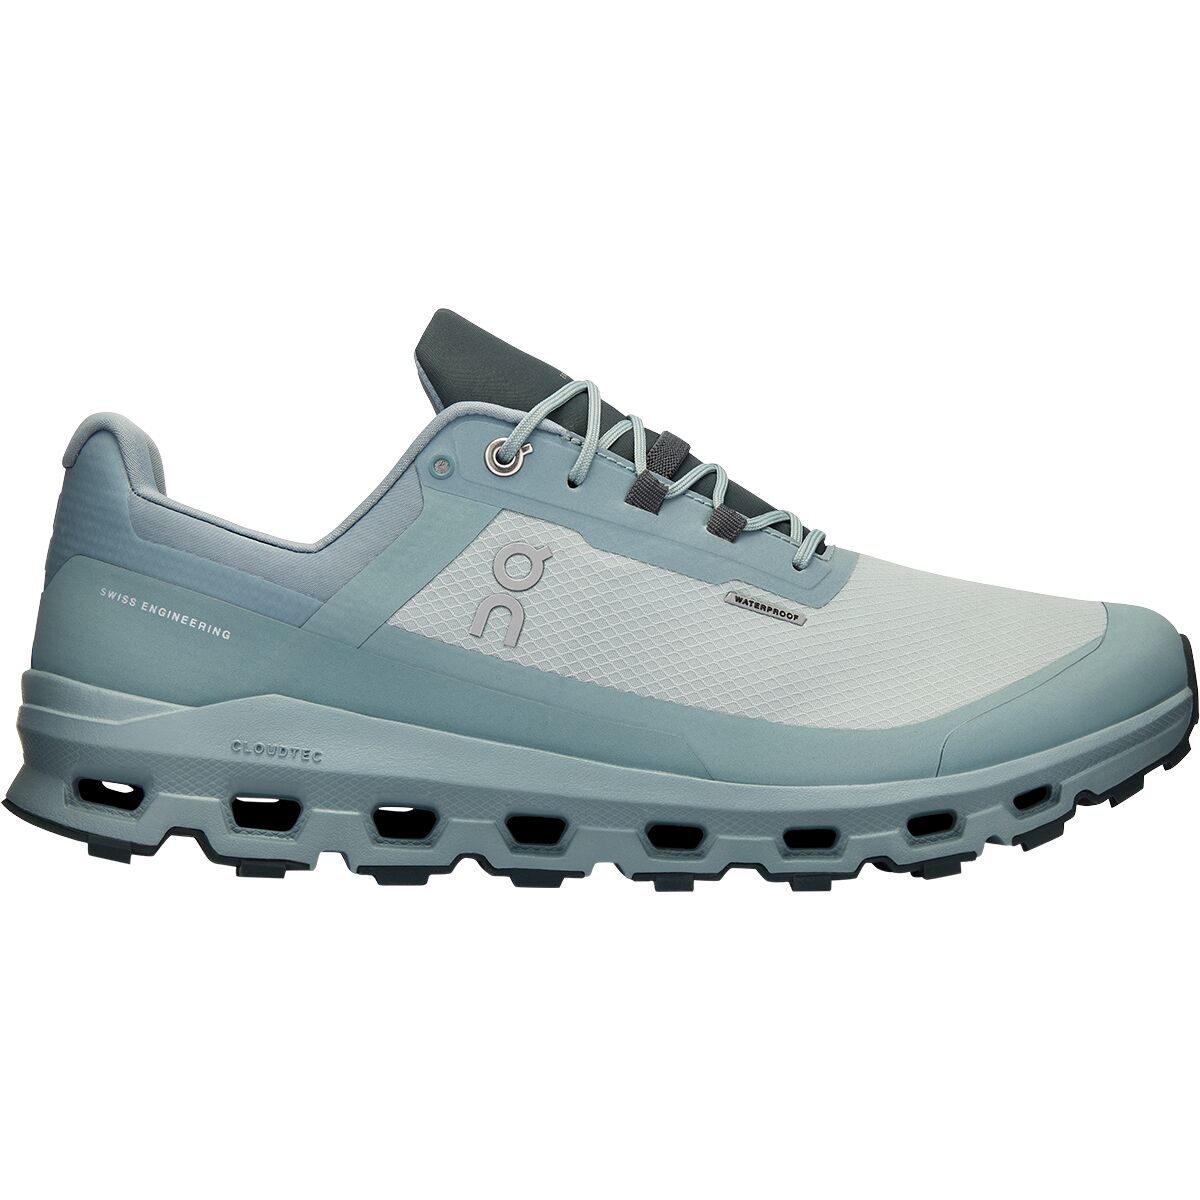 Cloudvista Waterproof Shoe - Men